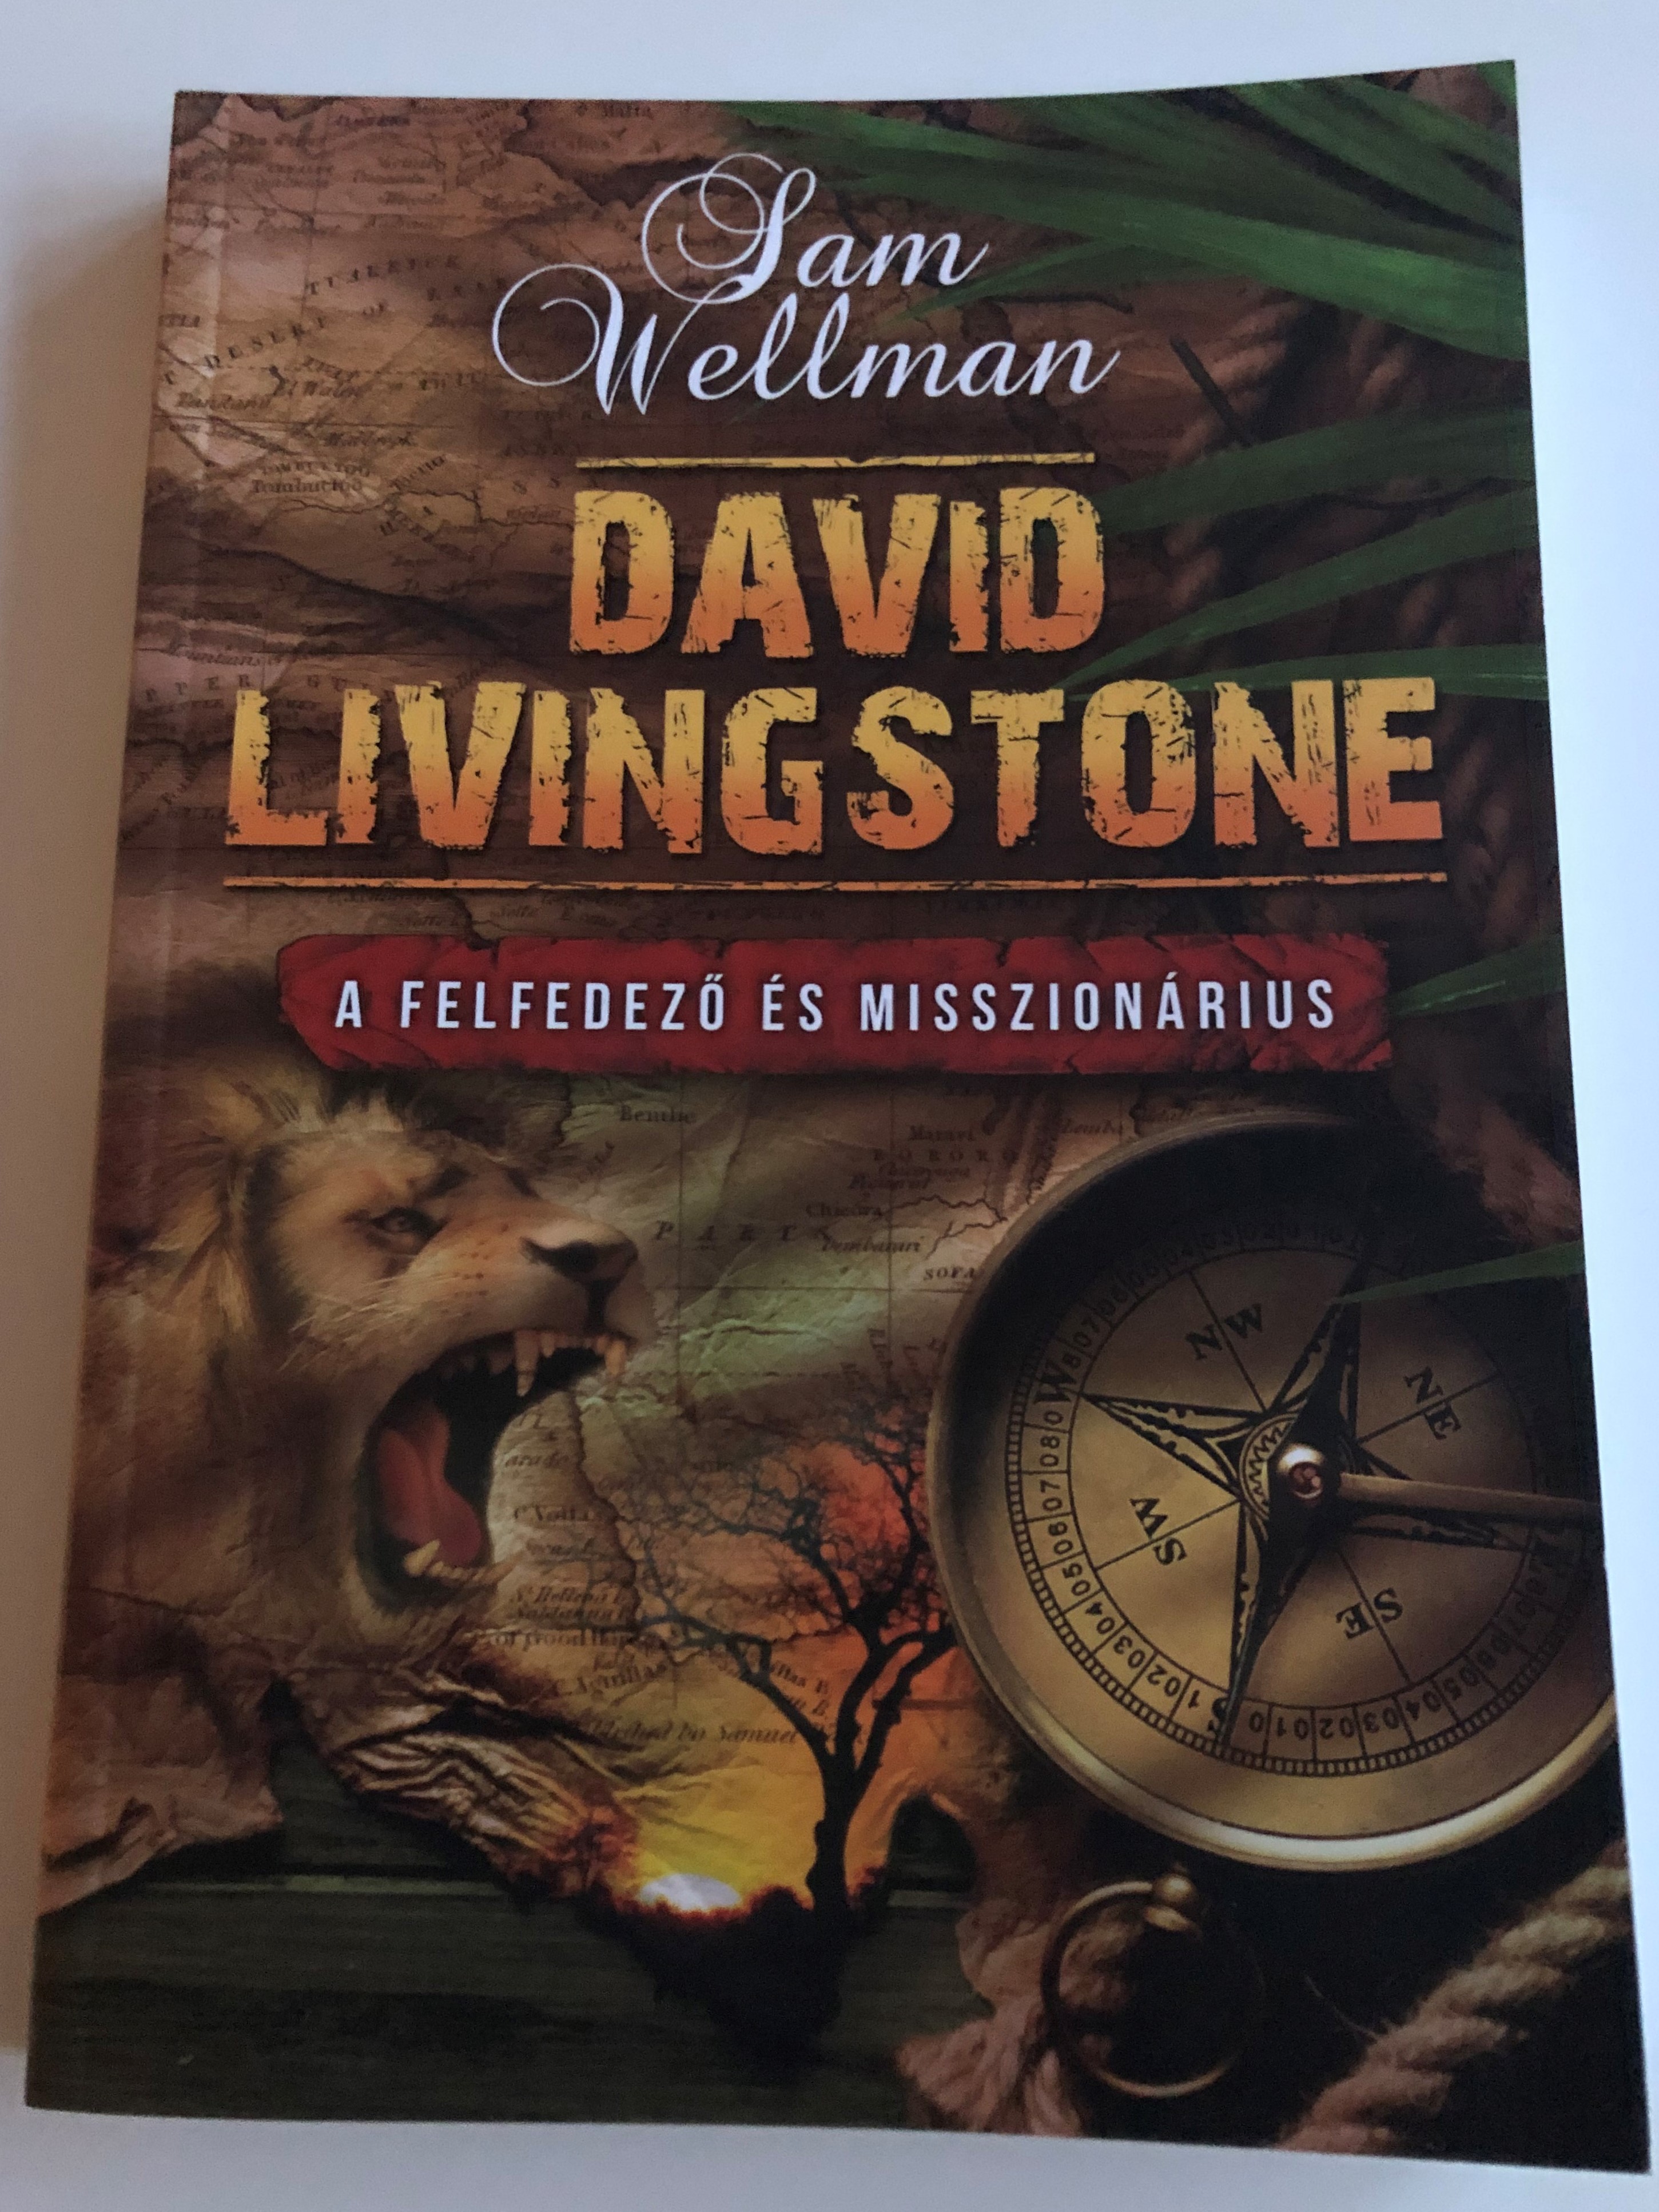 david-livingstone-by-sam-wellman-a-felfedez-s-misszion-rius-1.jpg